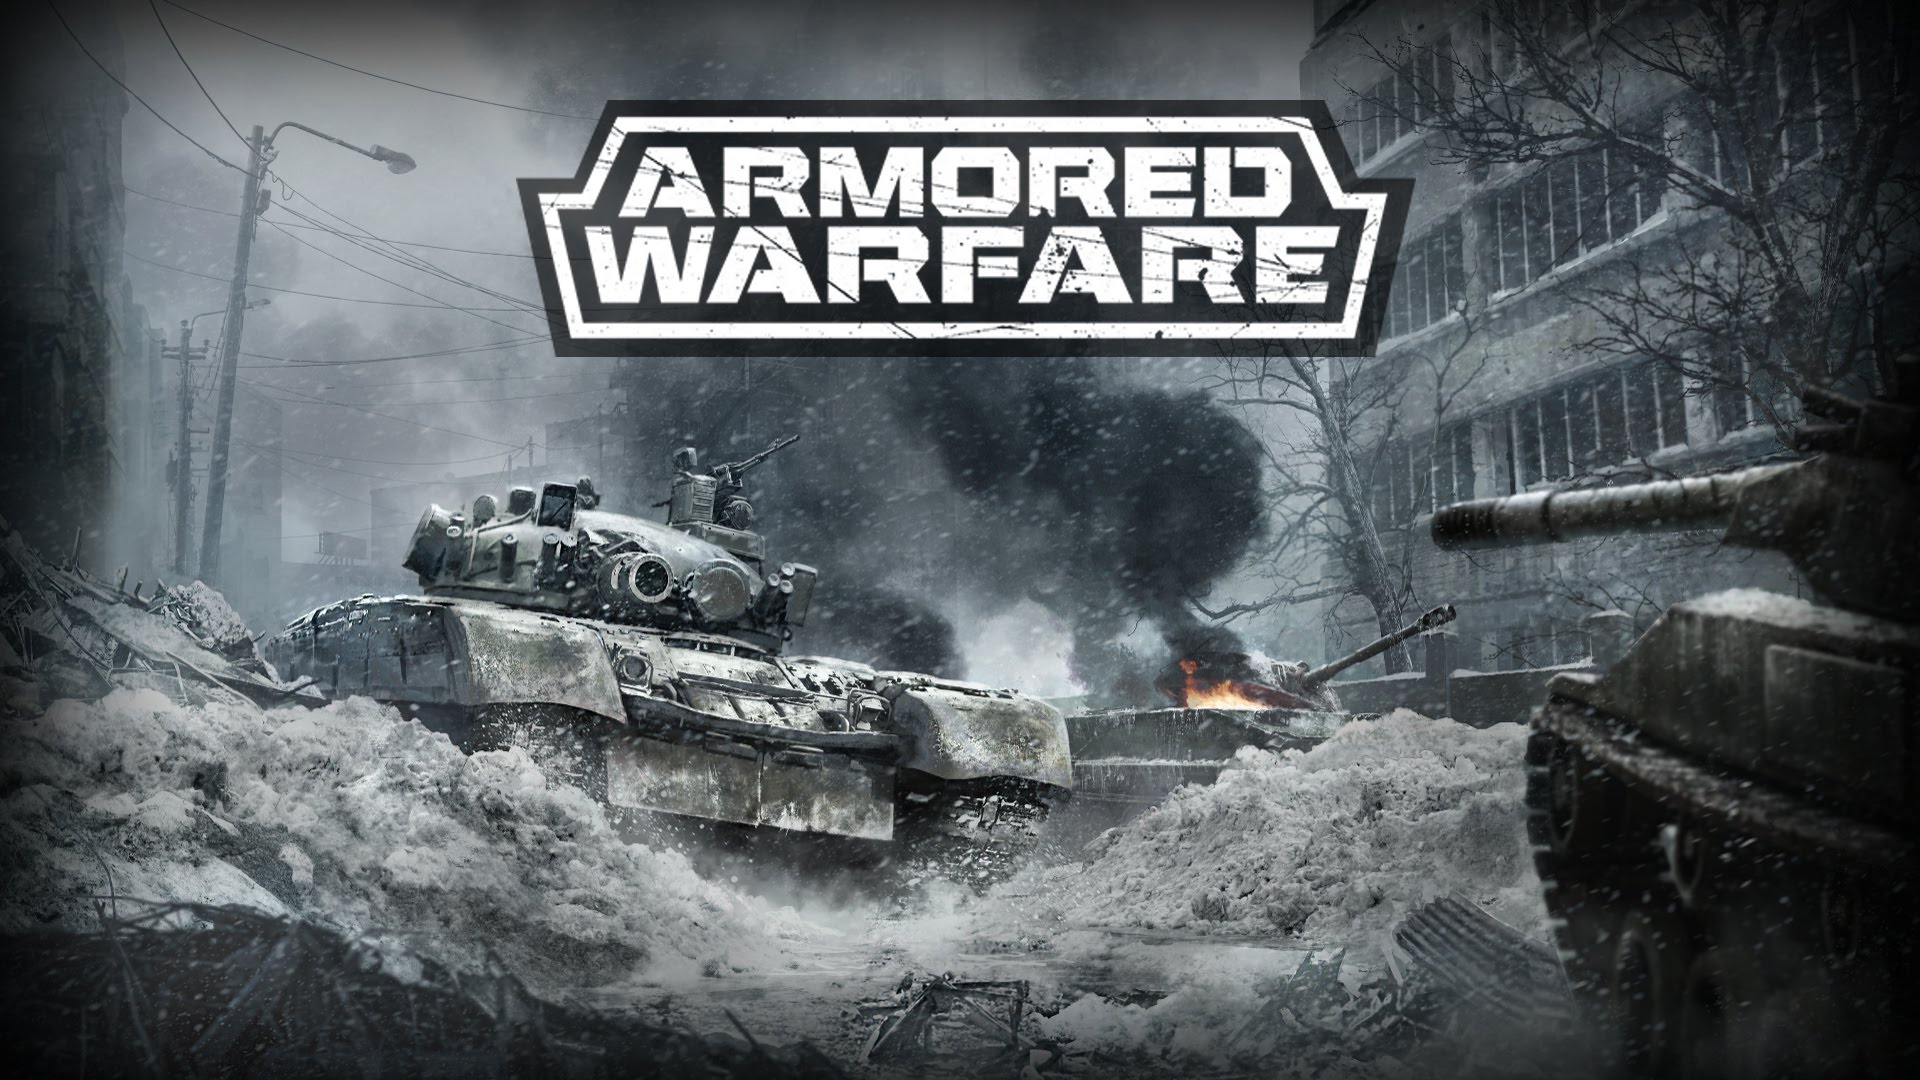 Armored Warfare HD wallpapers, Desktop wallpaper - most viewed